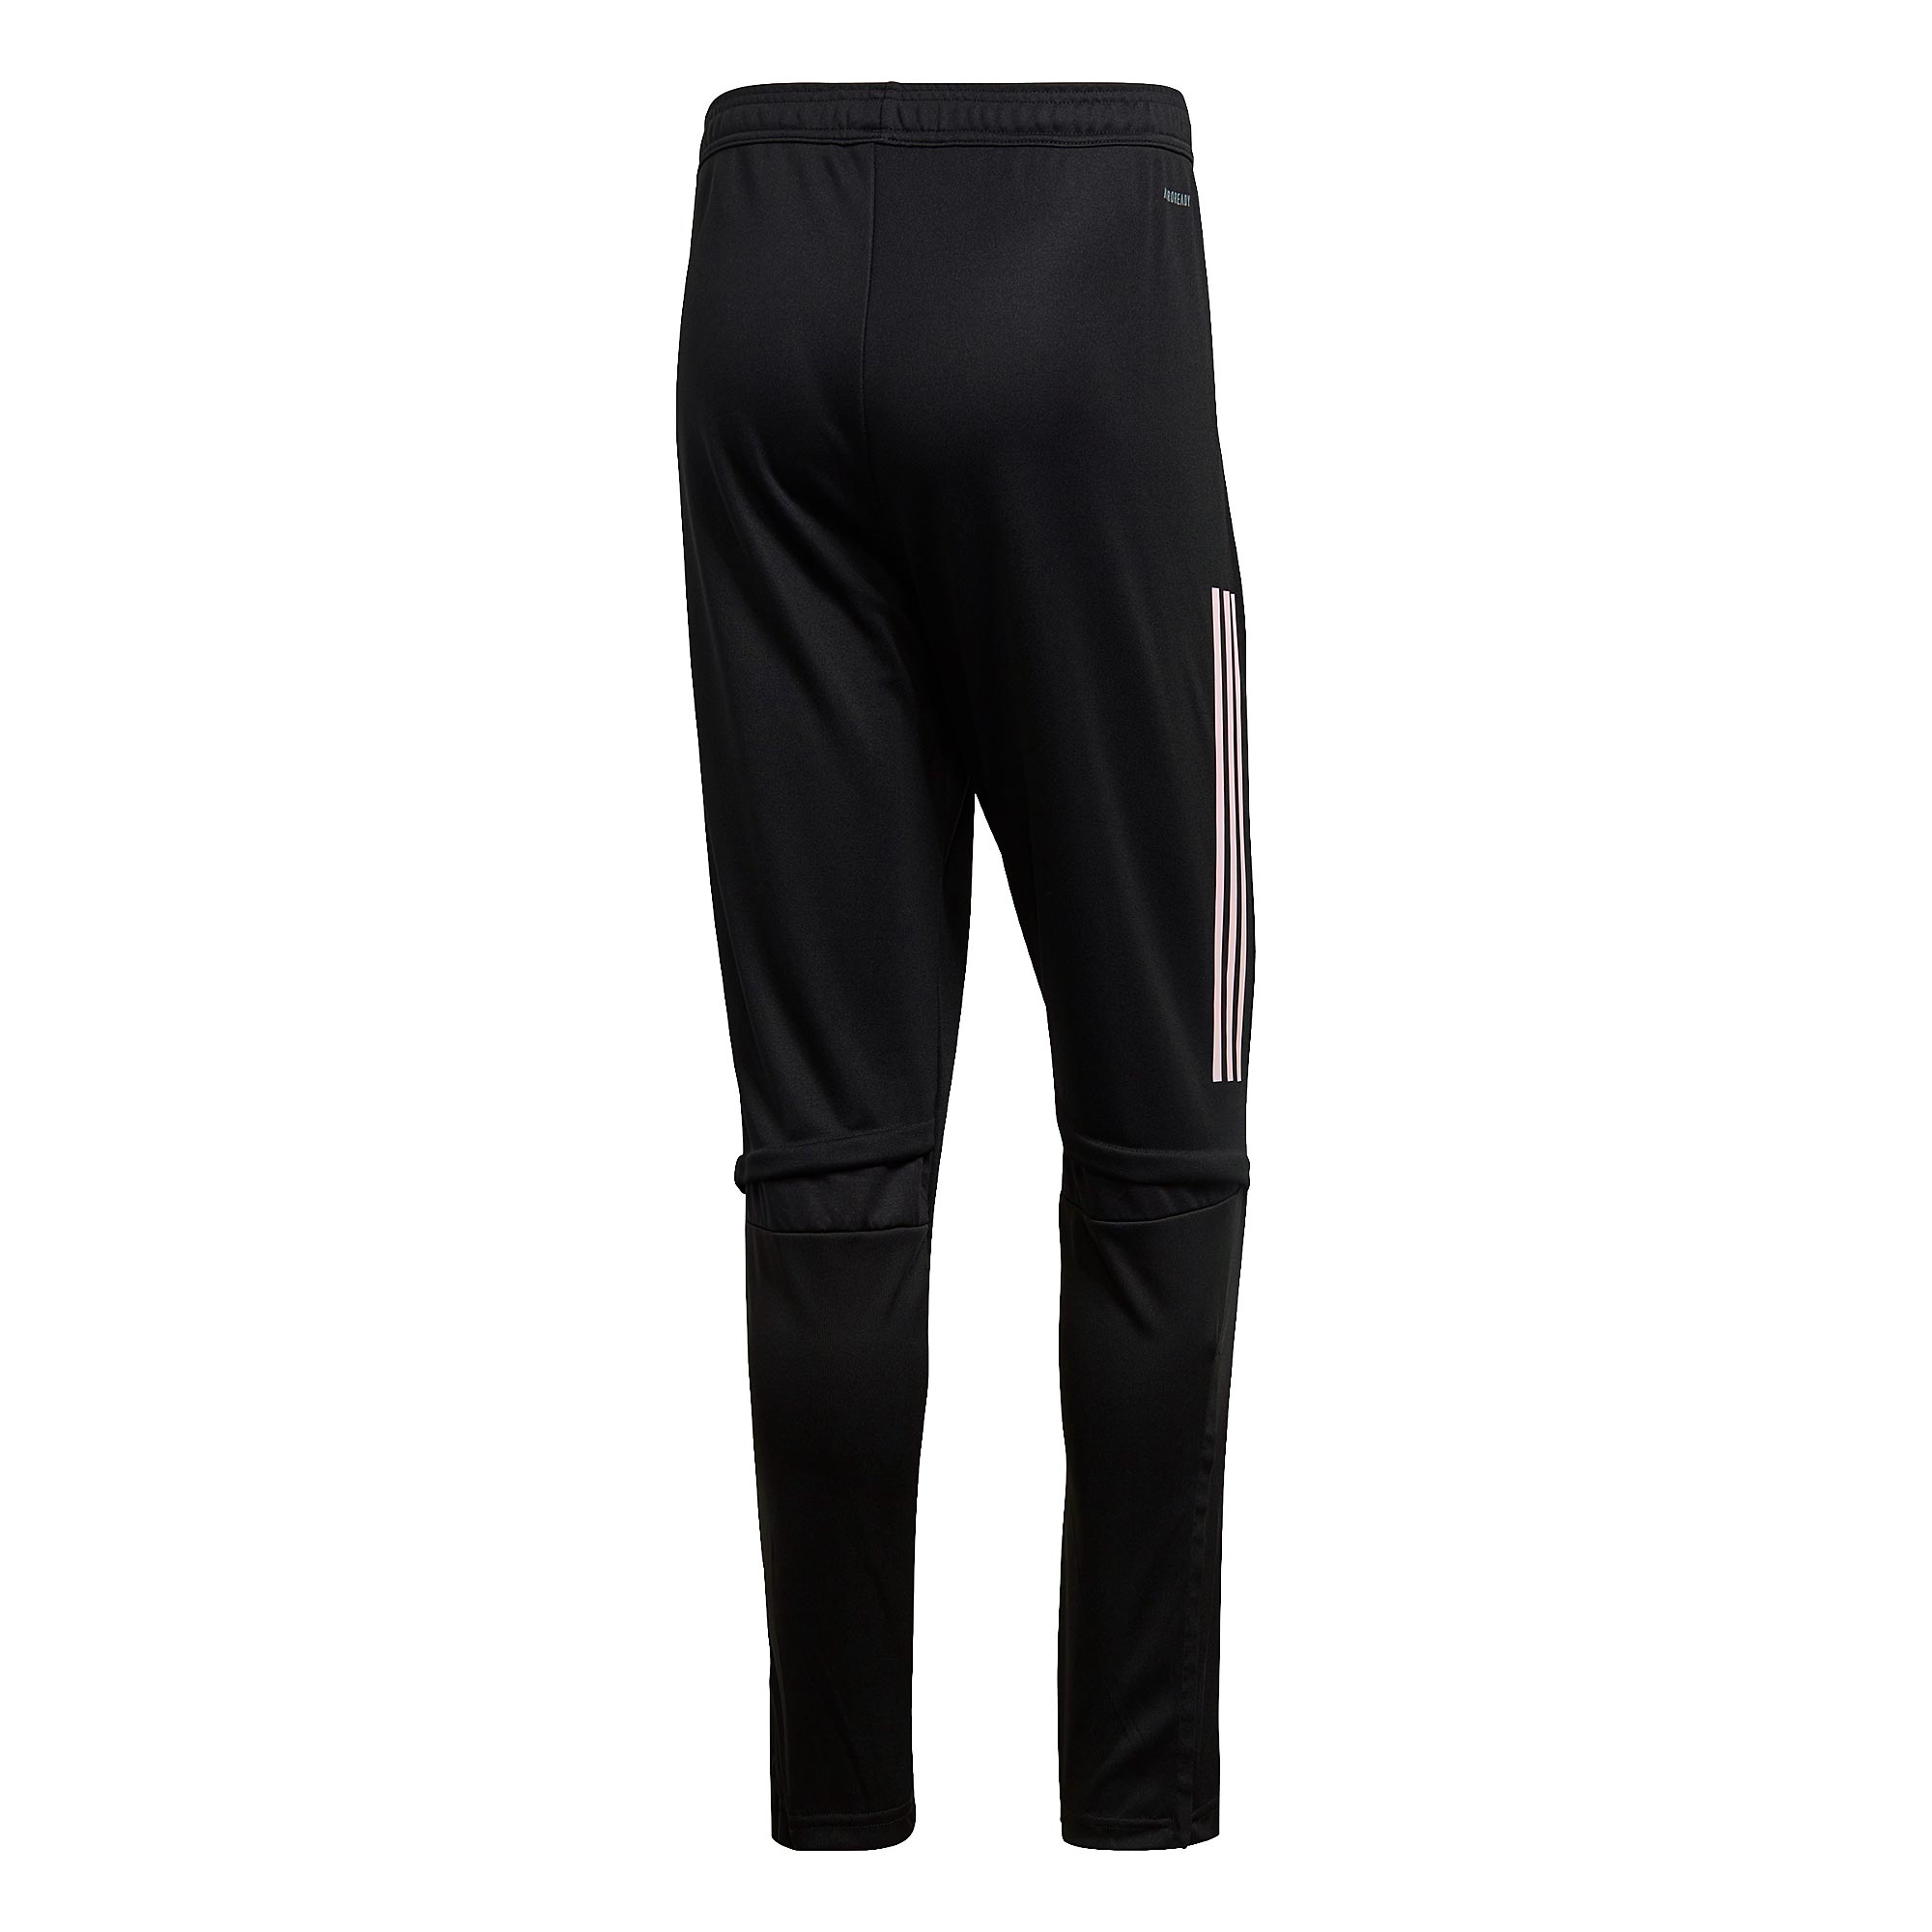 Adidas Mens Inter Miami CF Training Football Sport Pants - Black | eBay